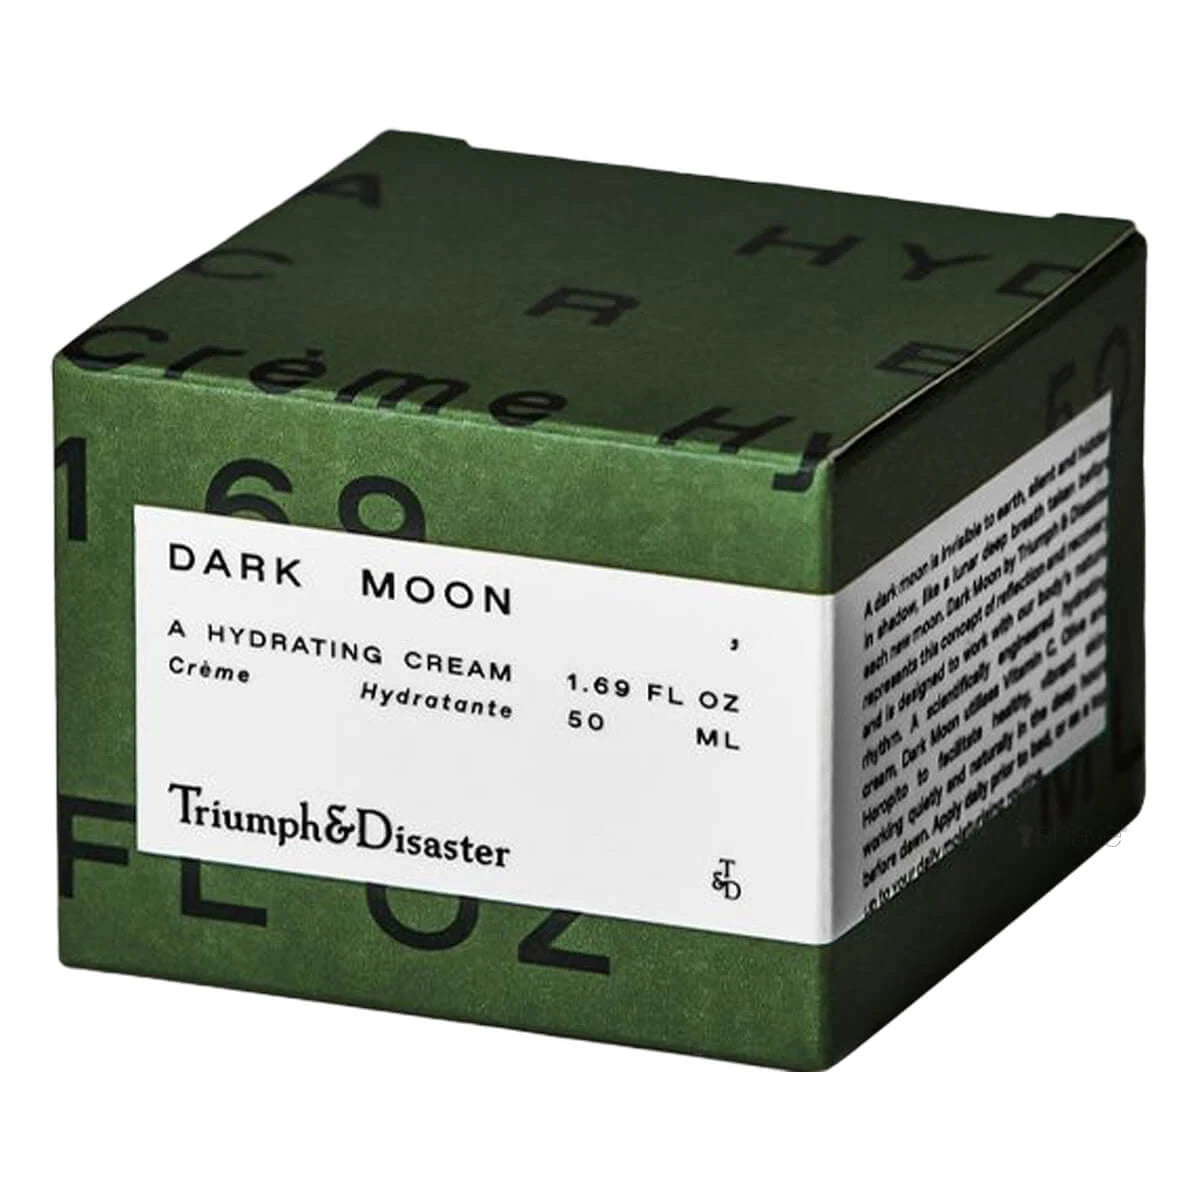 Triumph & Disaster, Dark Moon Hydrating Cream